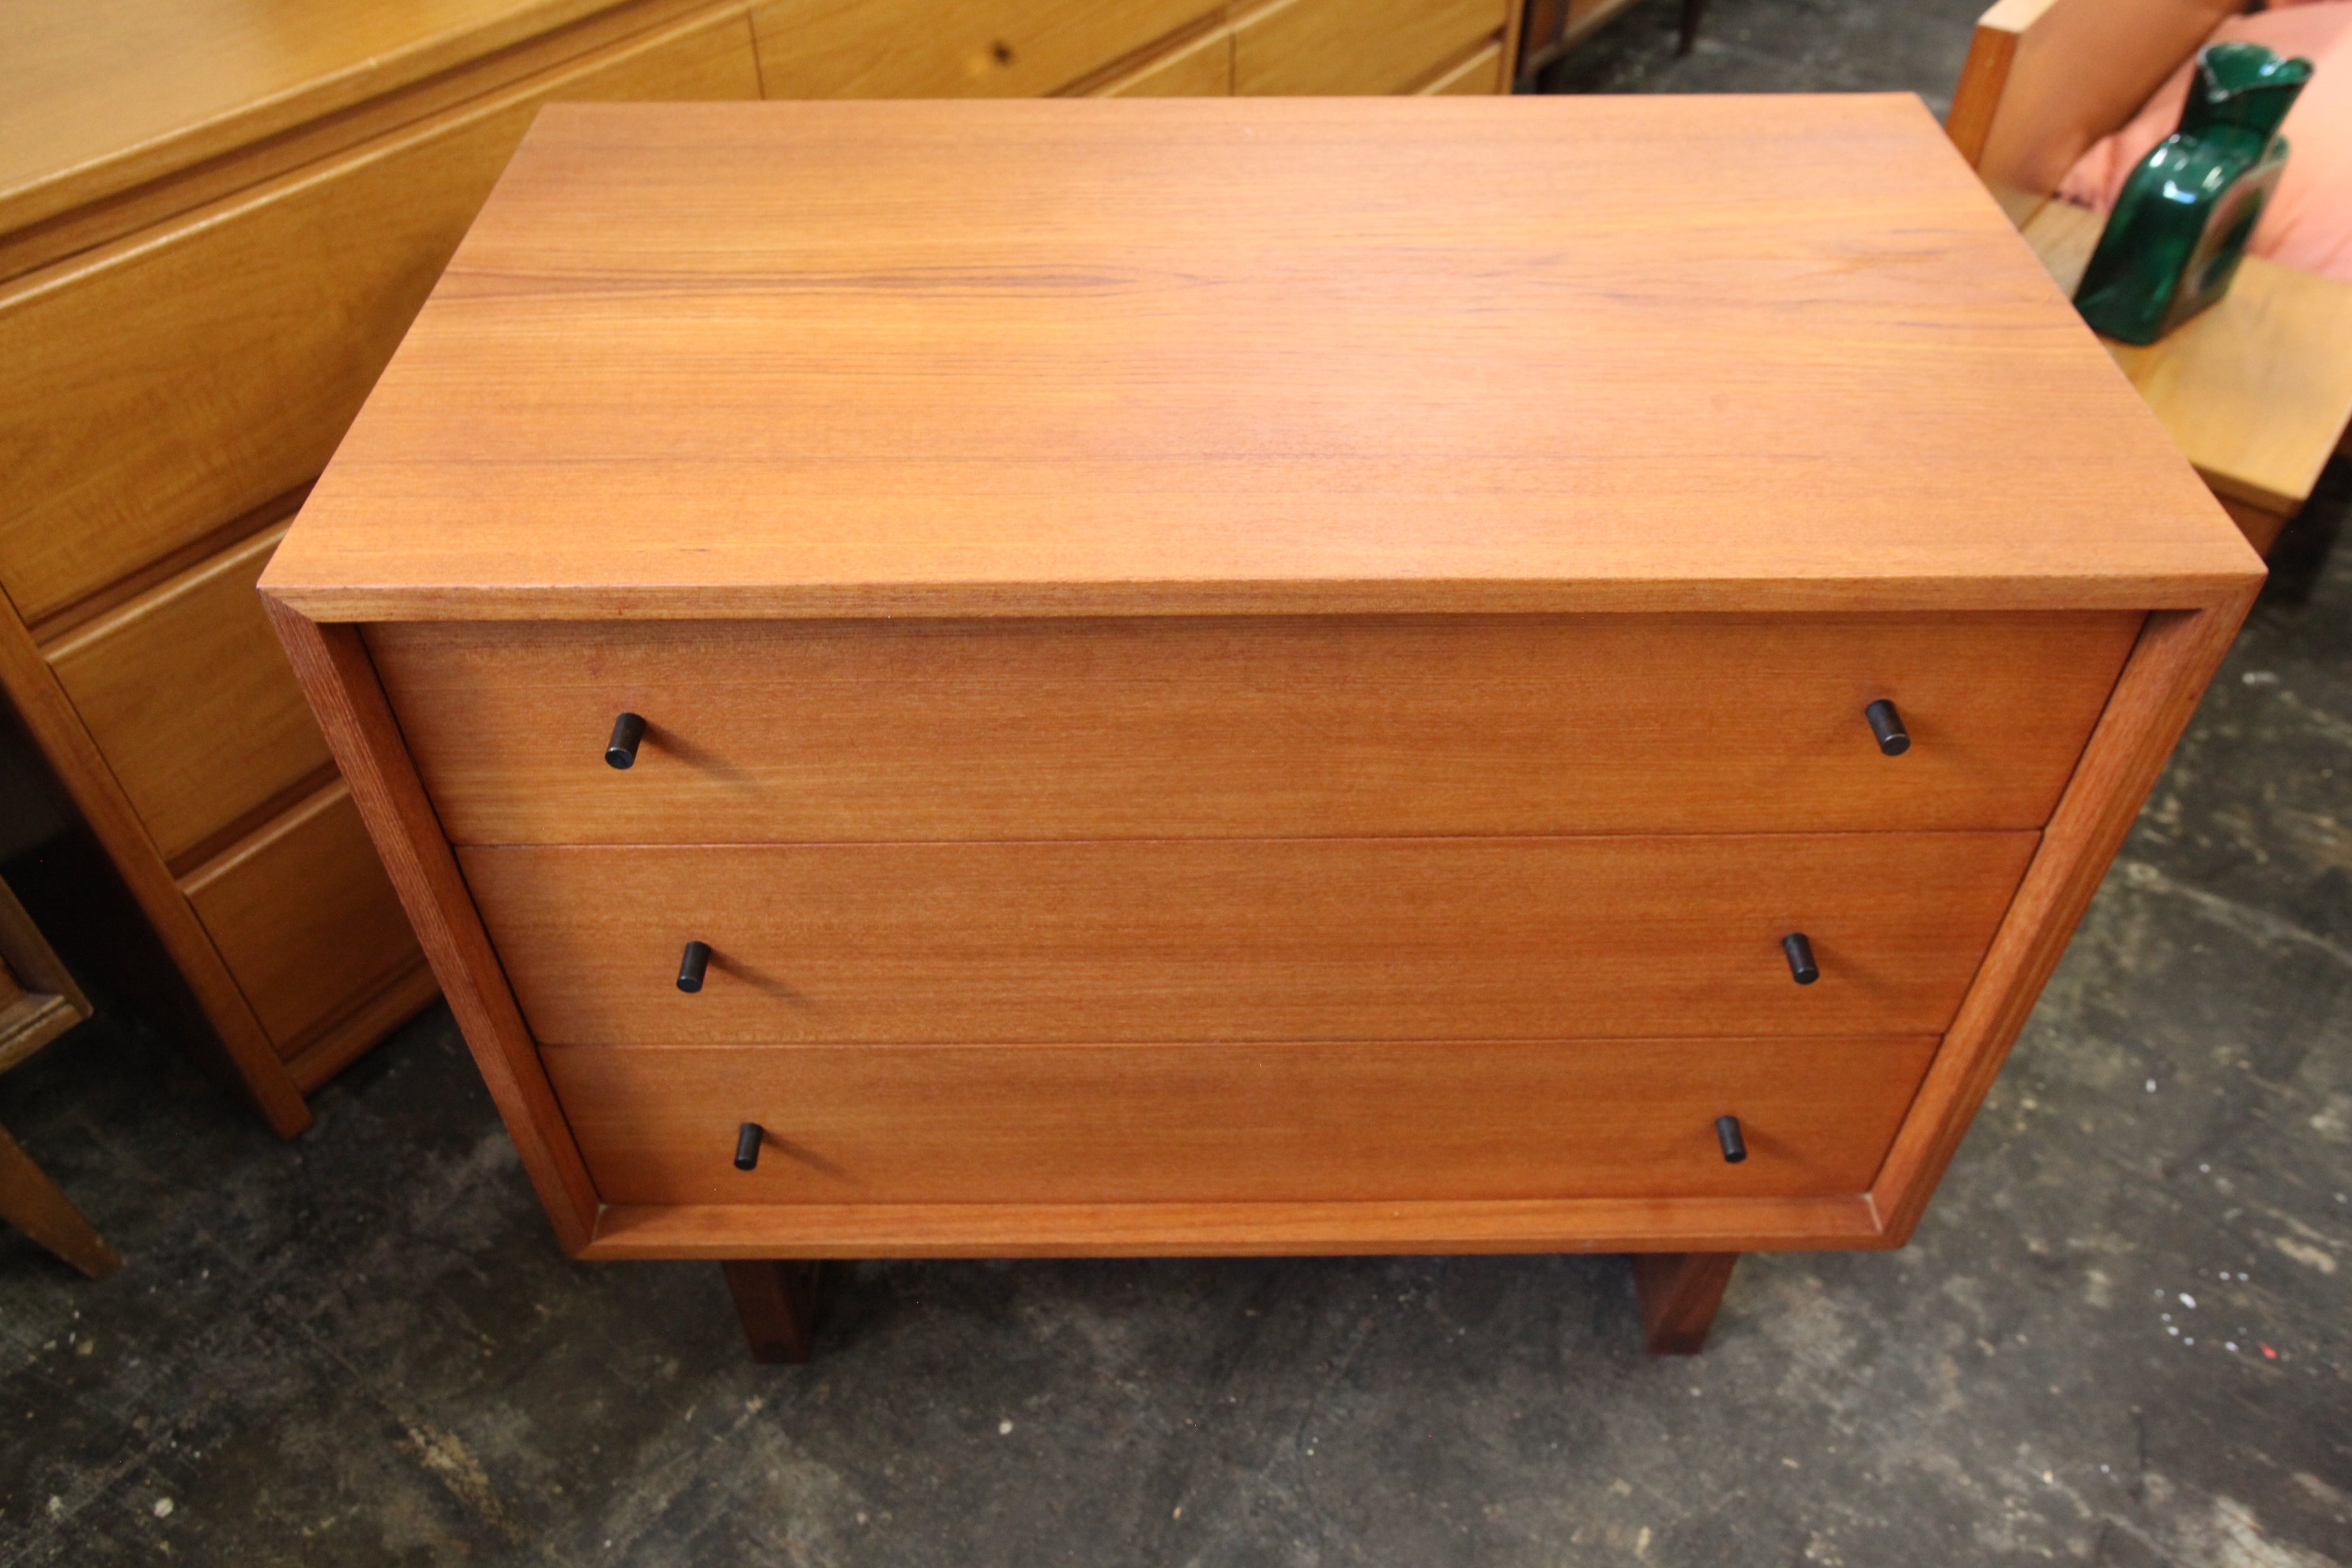 Vintage Teak 3 Drawer Dresser by RS Associates Montreal (31.5"W x 18"D x 27.75"H)